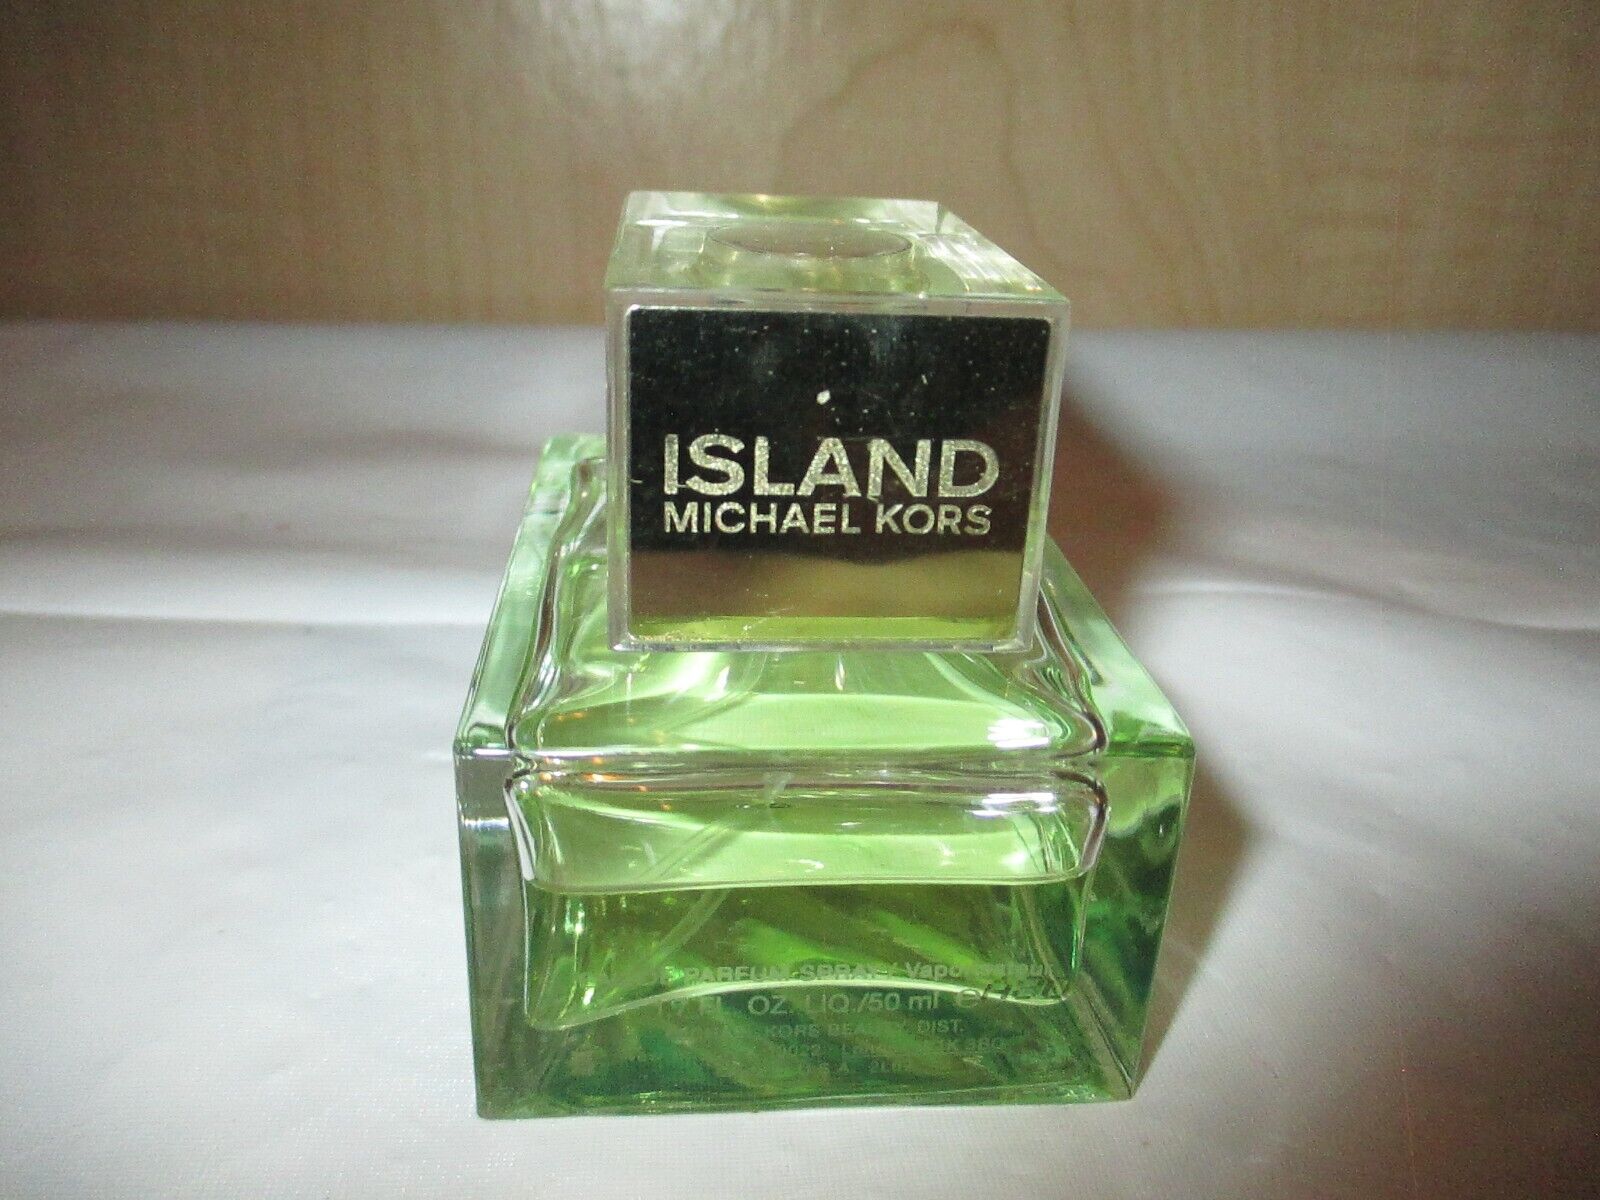 Michael Kors Island Palm Beach 1.7 oz Eau de Parfum Spray Women Perfume